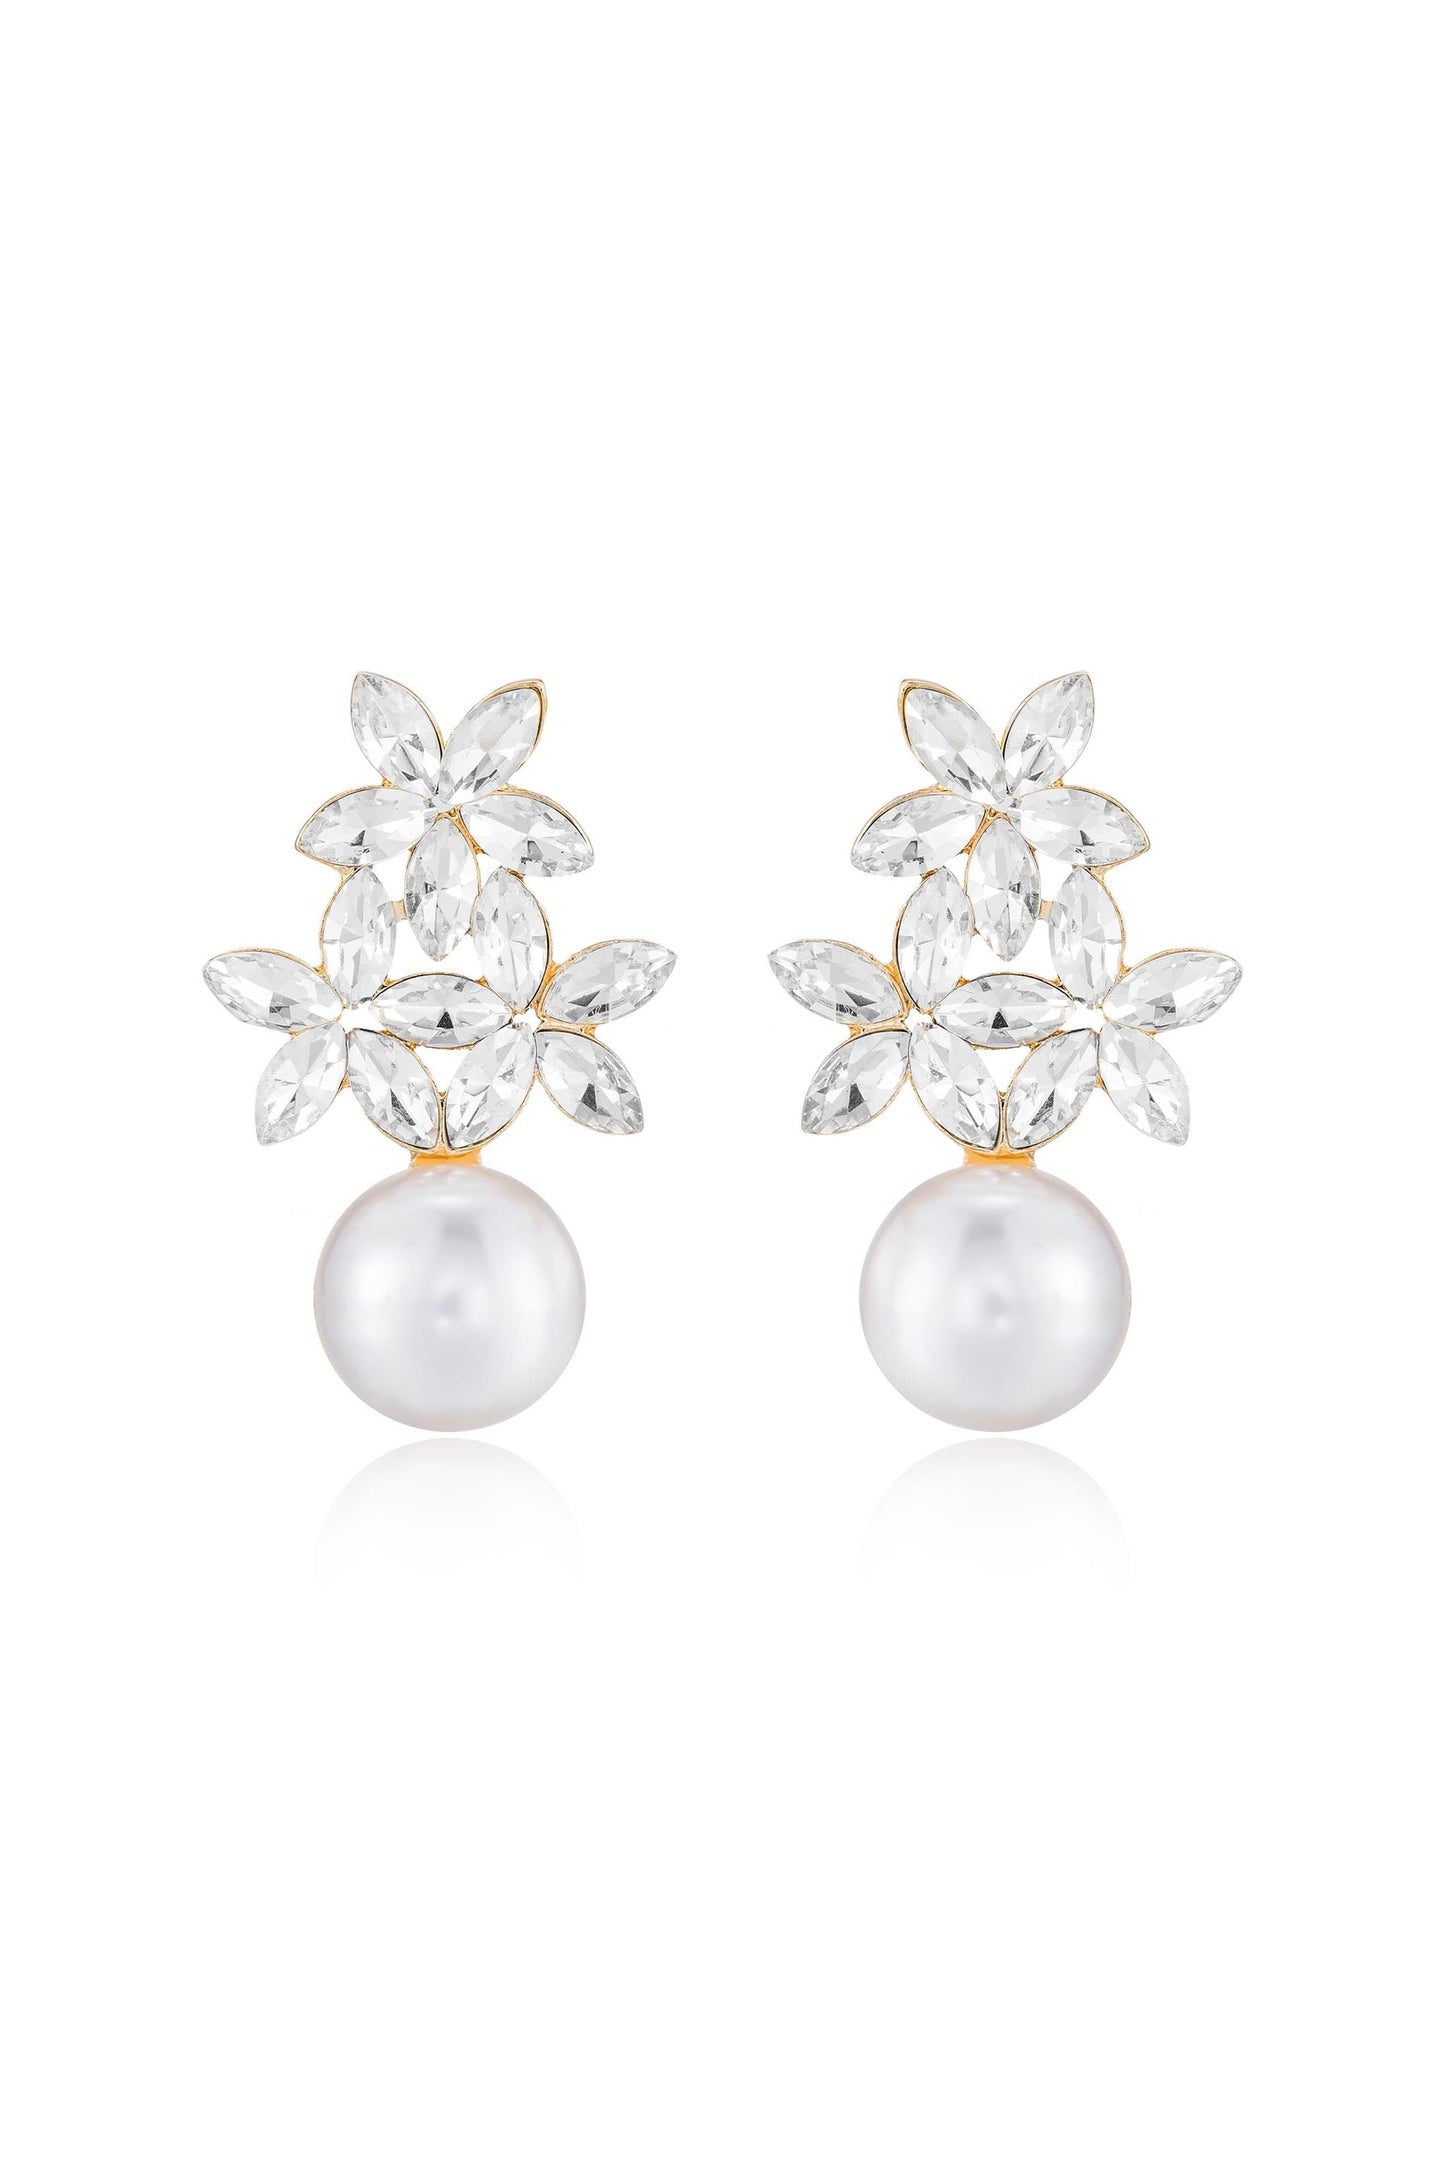 Best Day Crystal & Pearl Earrings - Premium Earrings from Ettika - Just $45! Shop now at Tooksie